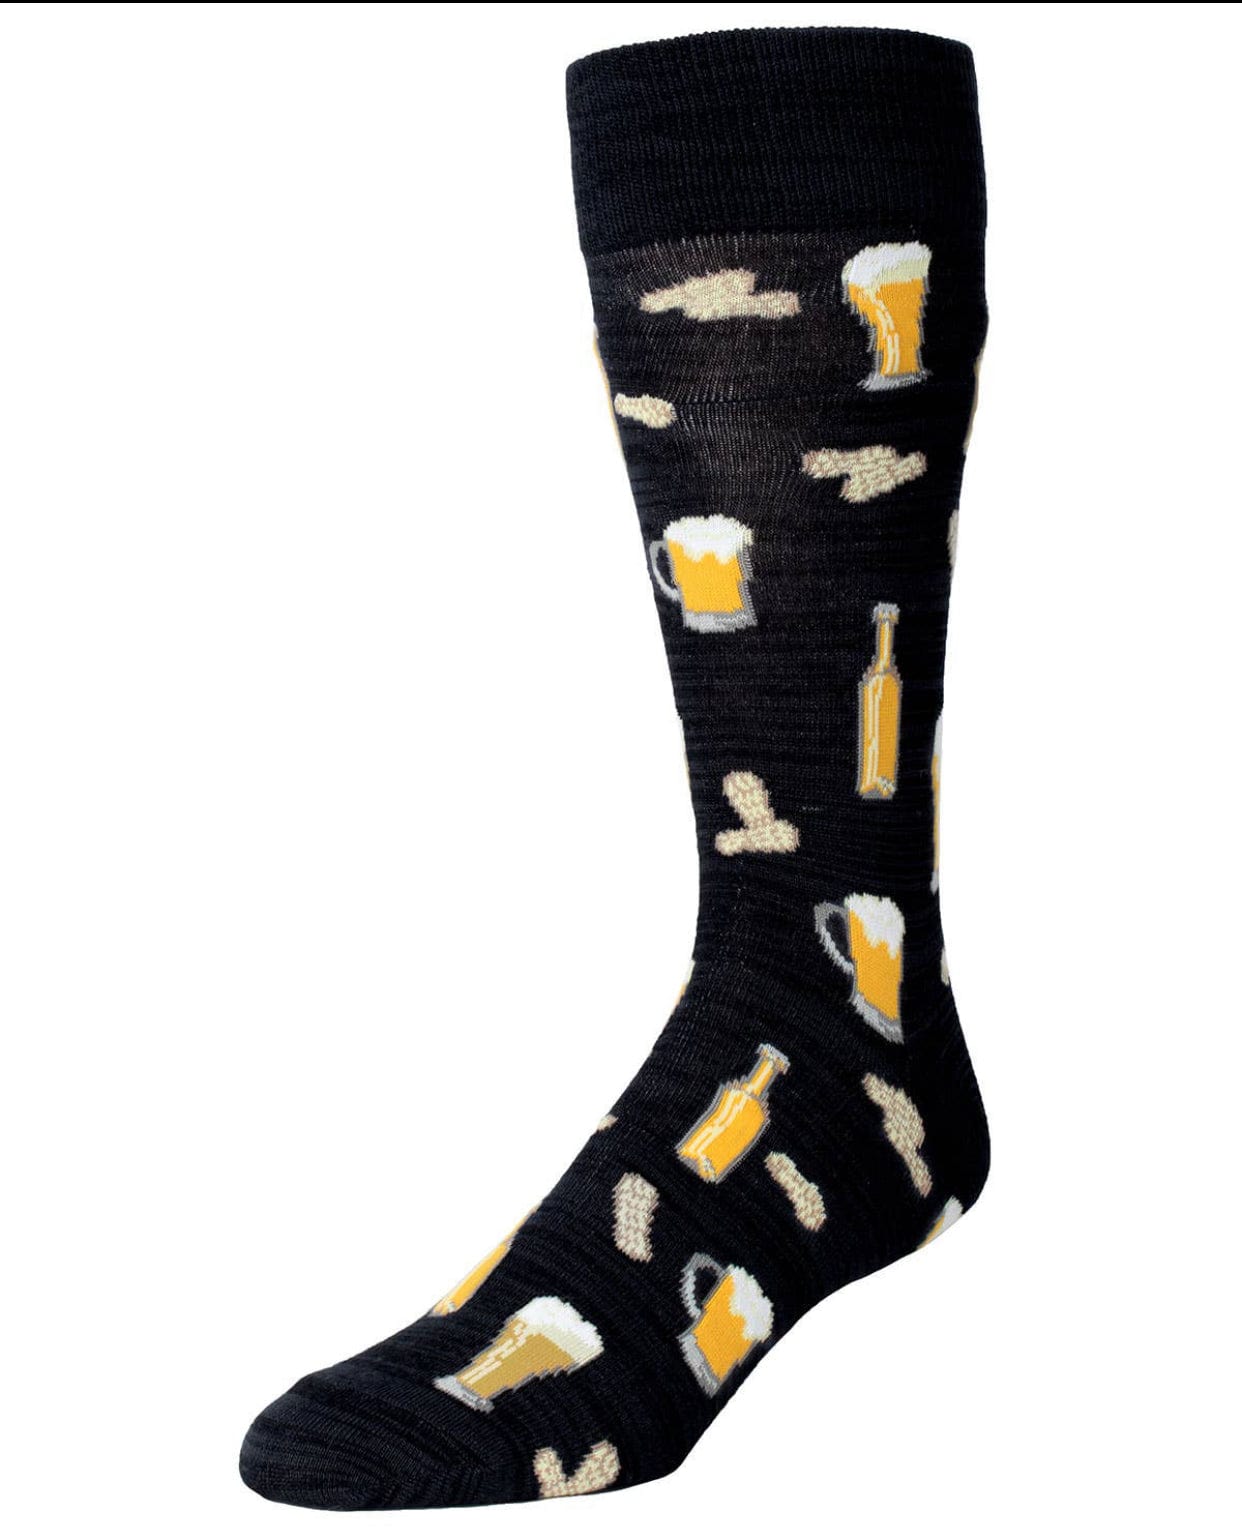 Men's Patterned Socks | Beer & Peanuts Me Moi